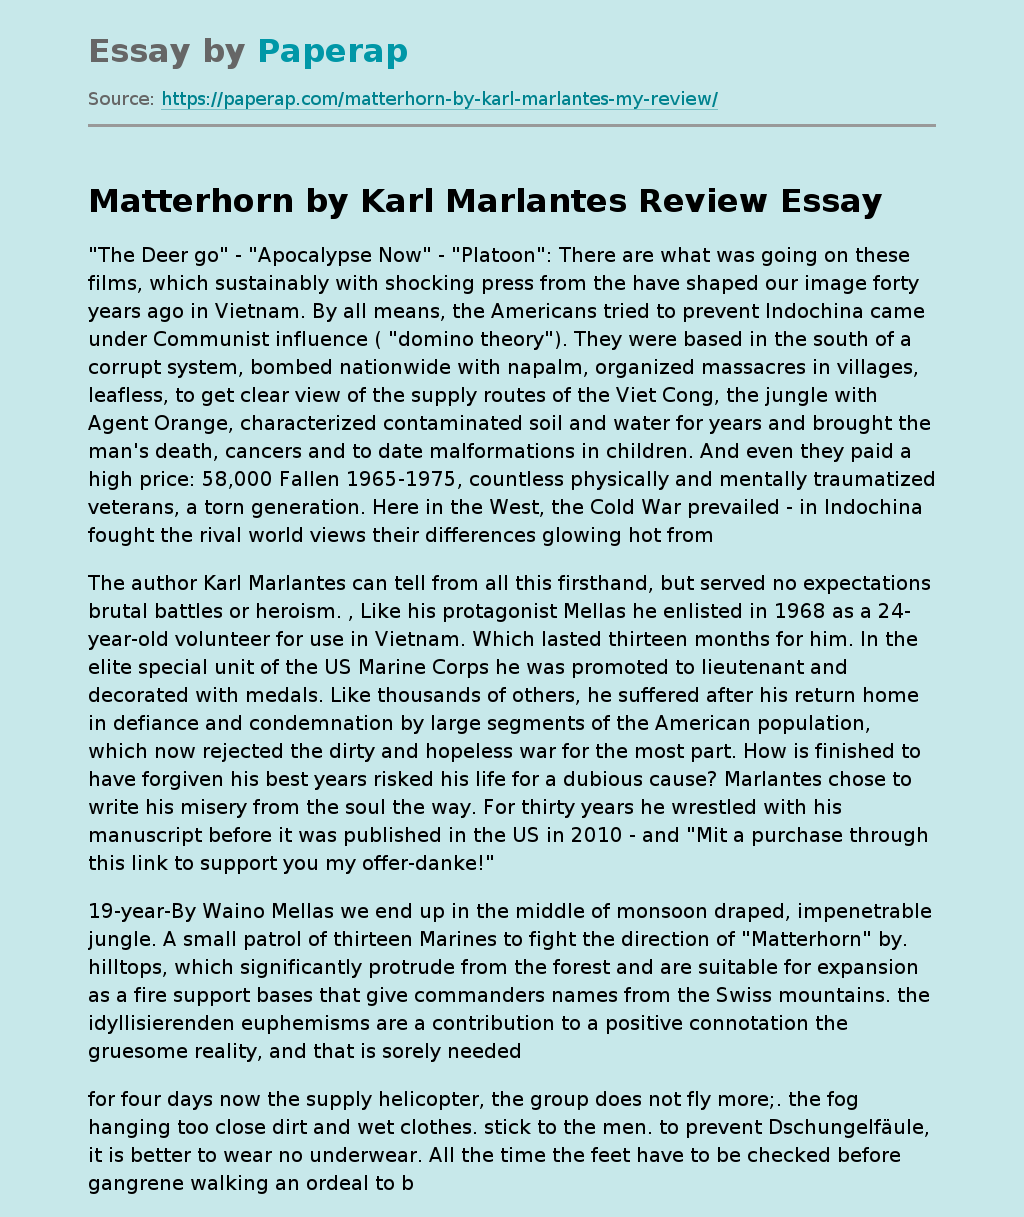 Matterhorn by Karl Marlantes Review